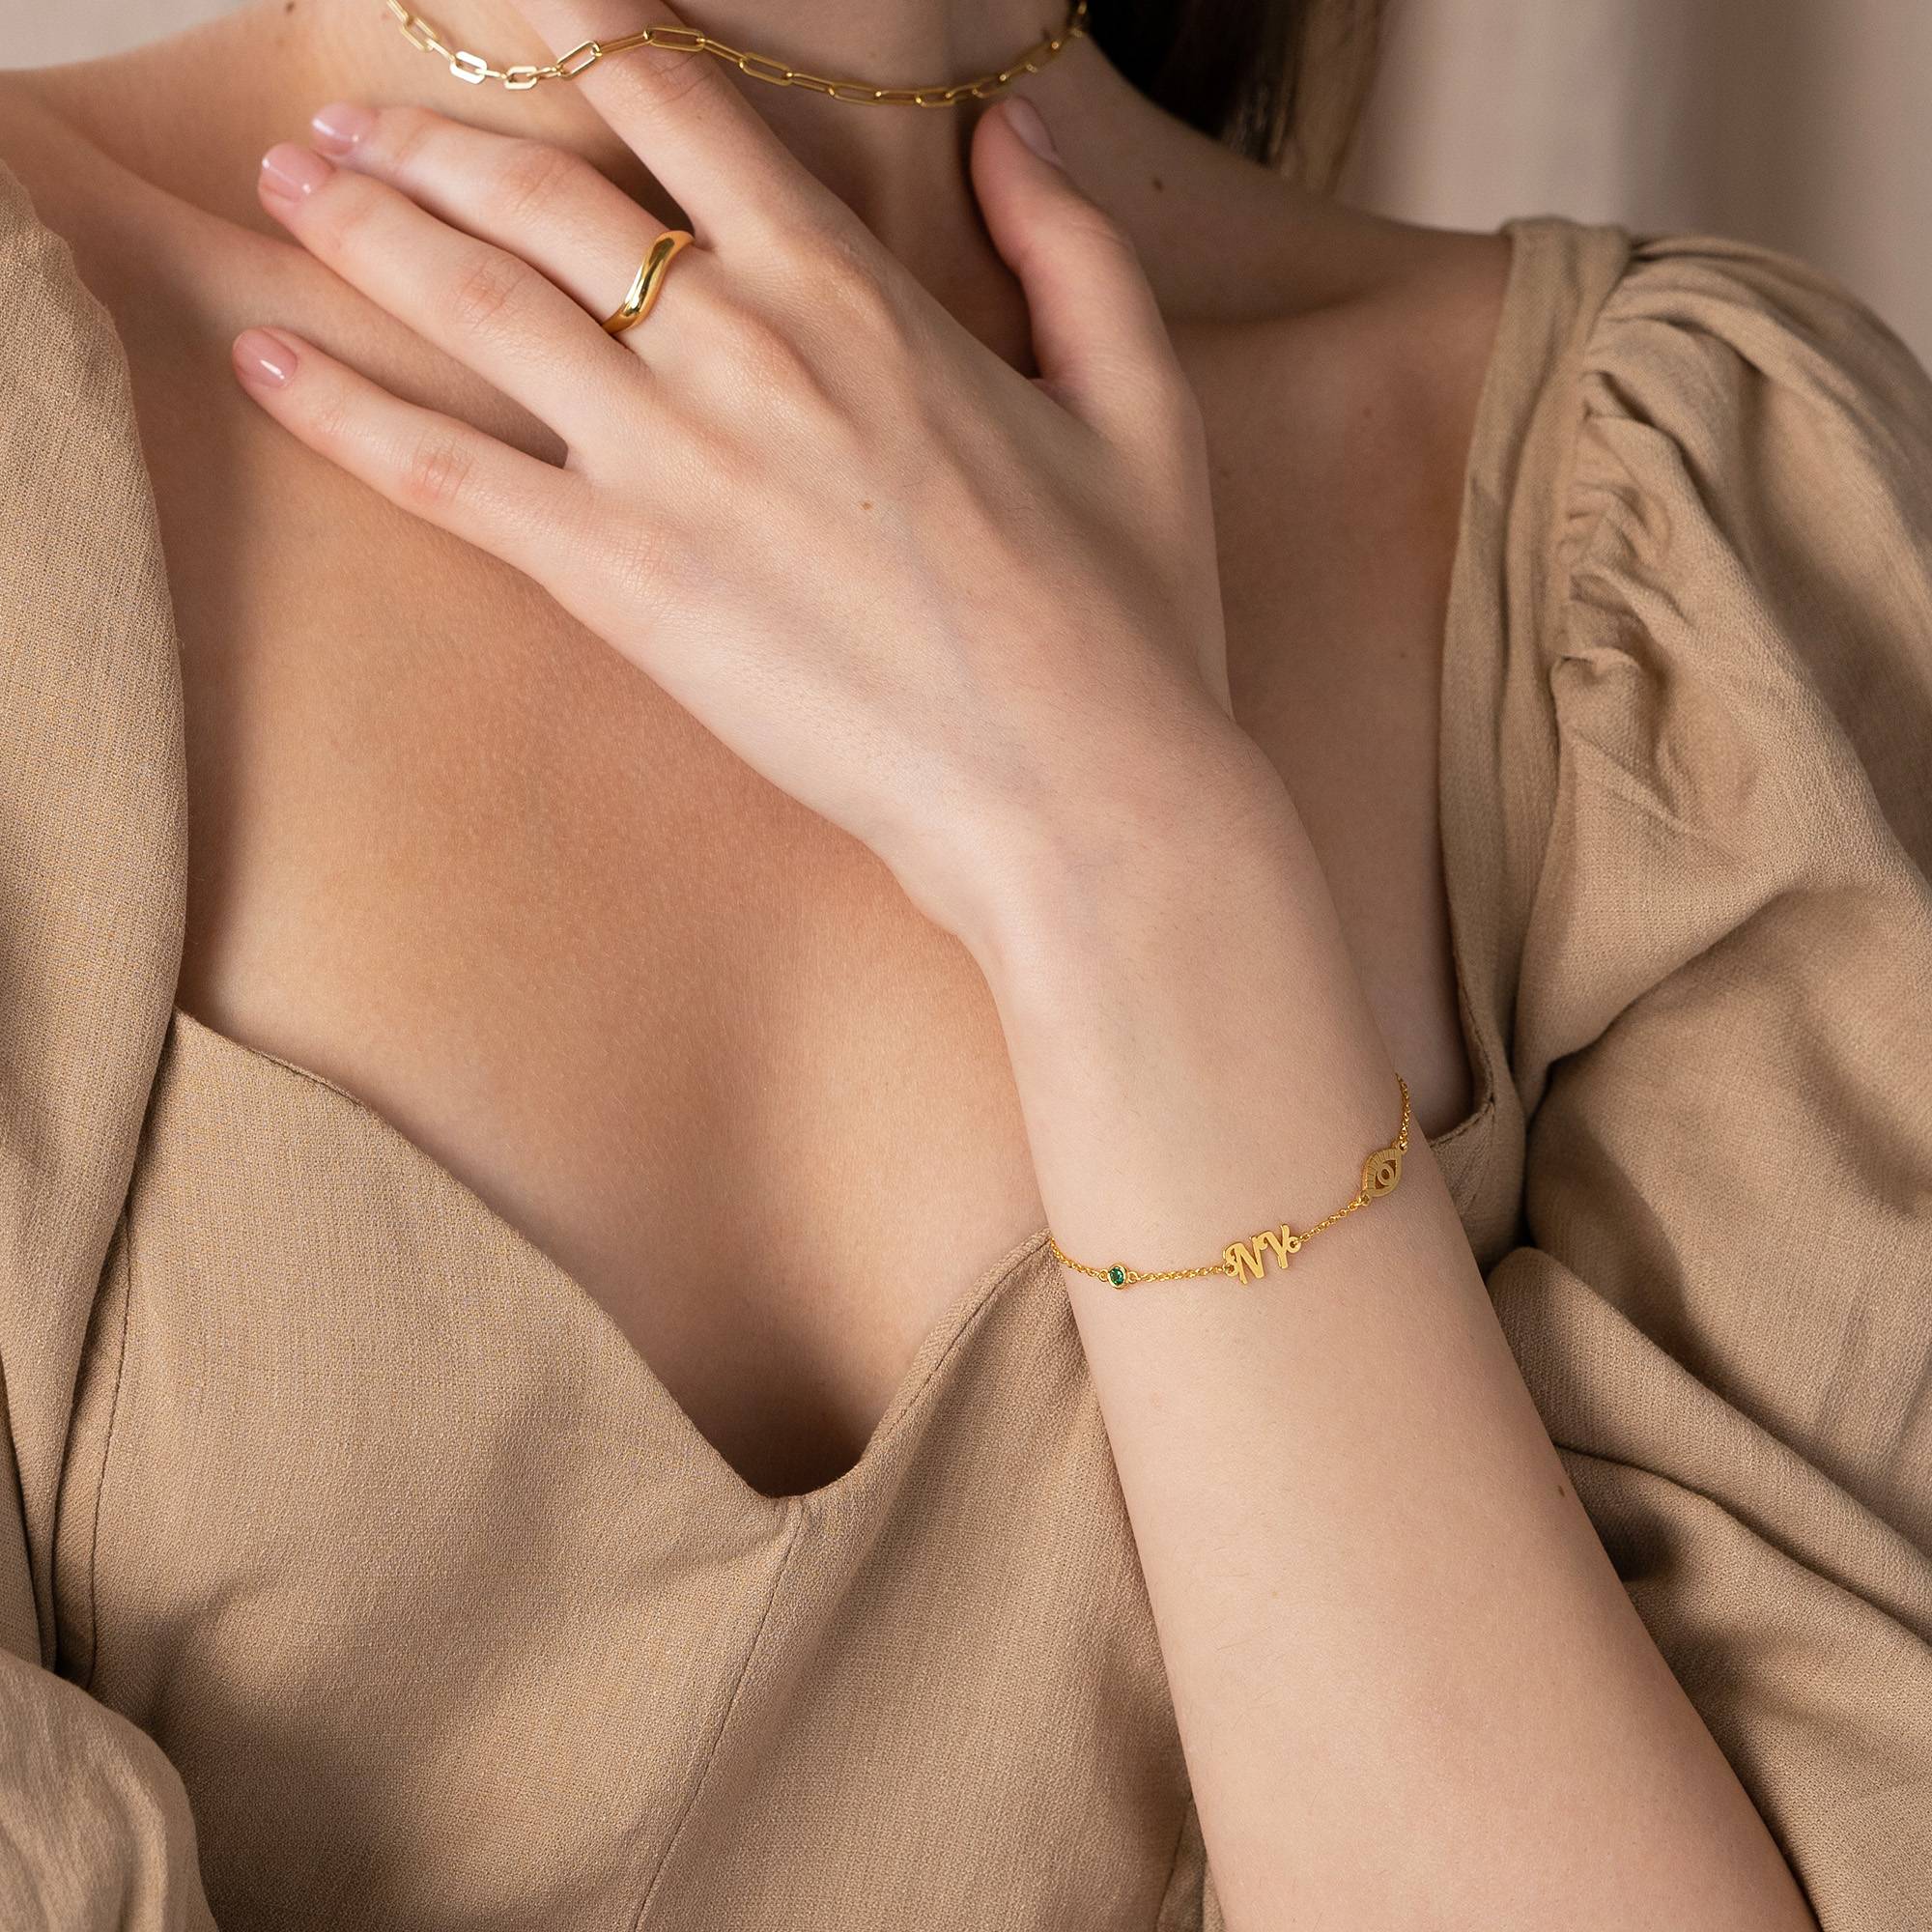 Bridget Evil Eye Initial Bracelet/Anklet with Gemstone in 18K Gold Vermeil-3 product photo